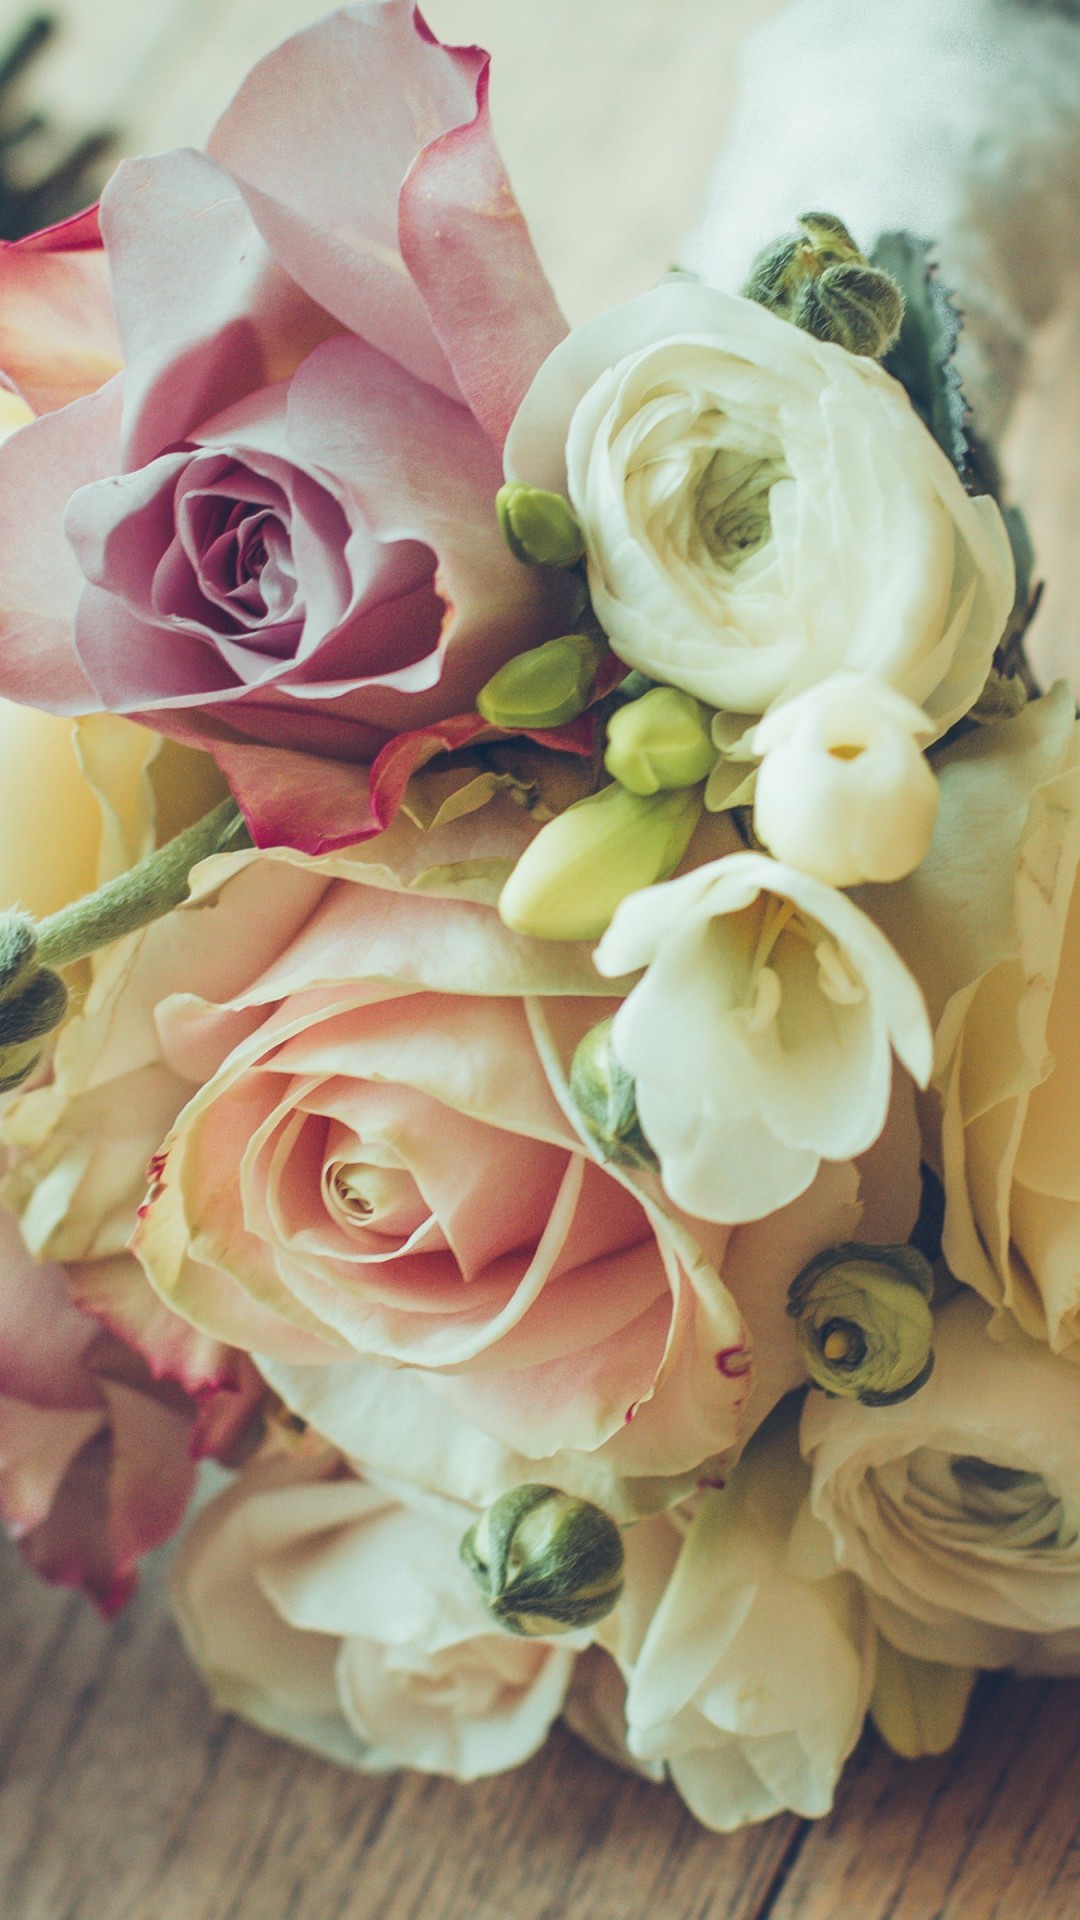 Roses Bouquet Composition Wallpaper for Google Nexus 5X